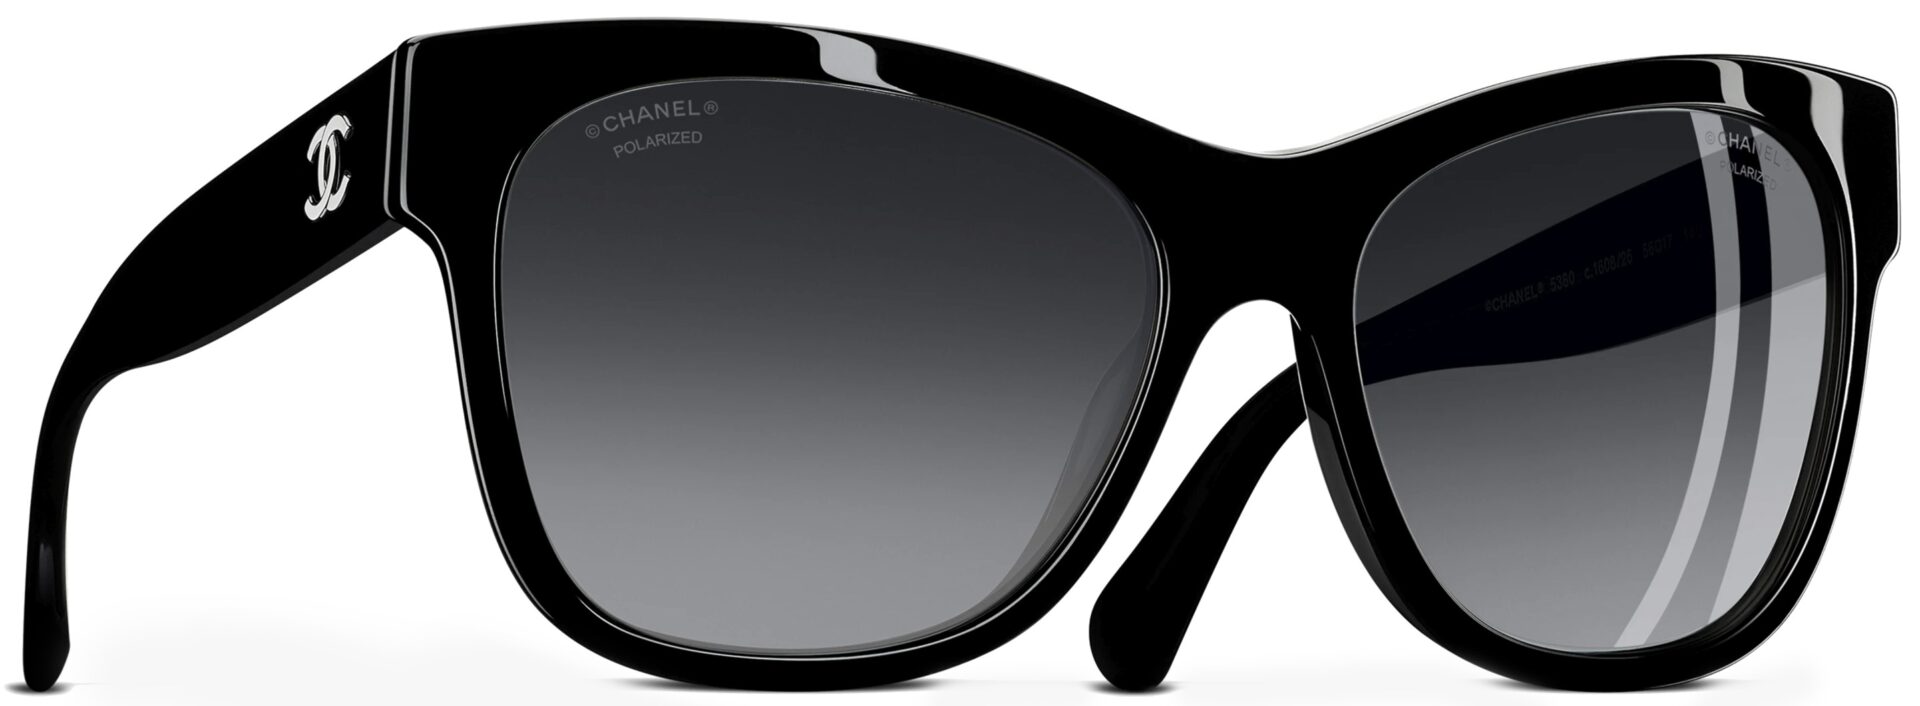 Gravier Sunglasses (Black Gold) | style